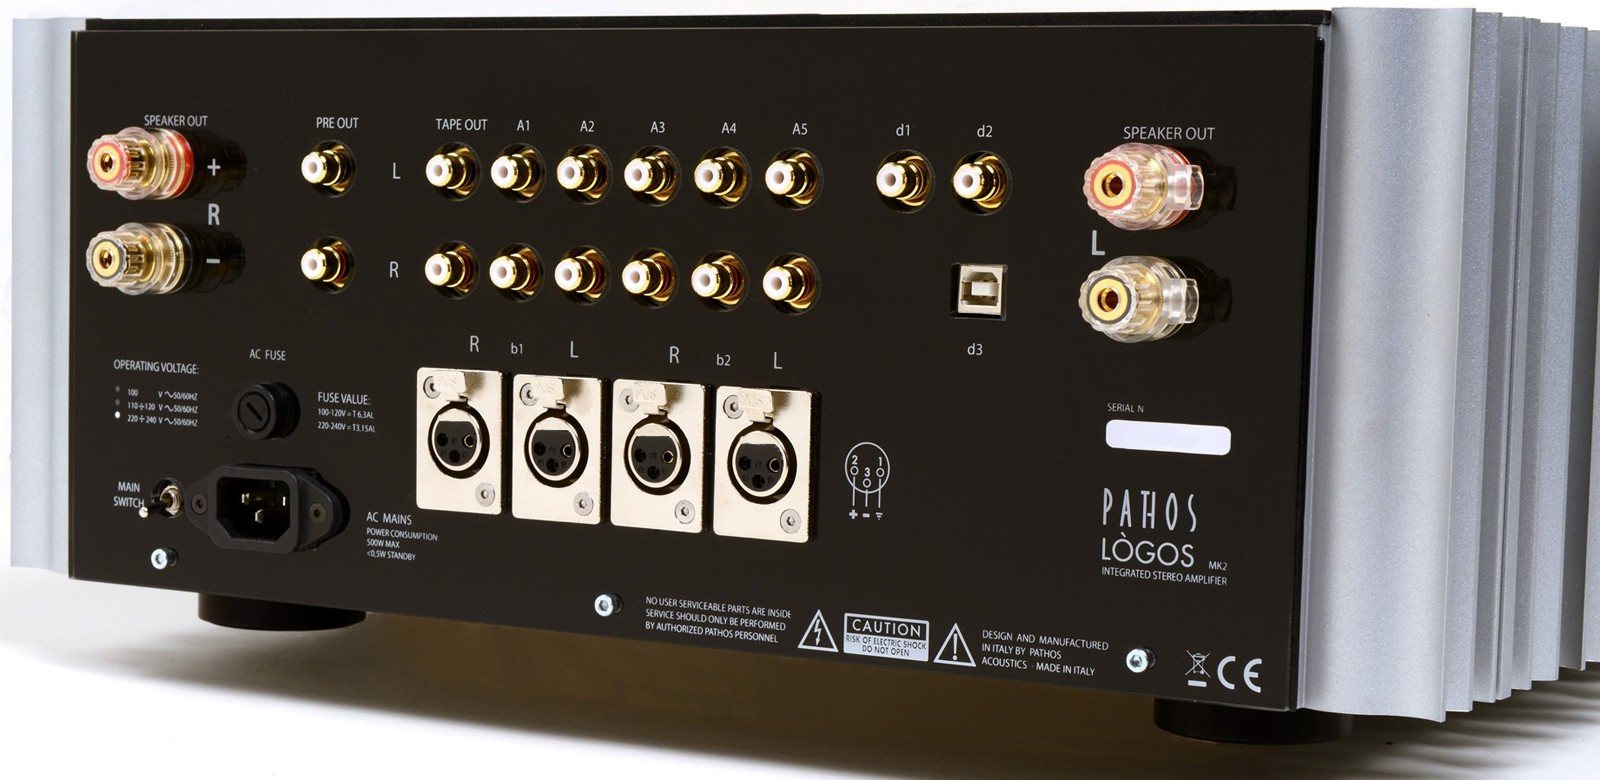 pathos-logos-integrated-amplifier-84f.jp